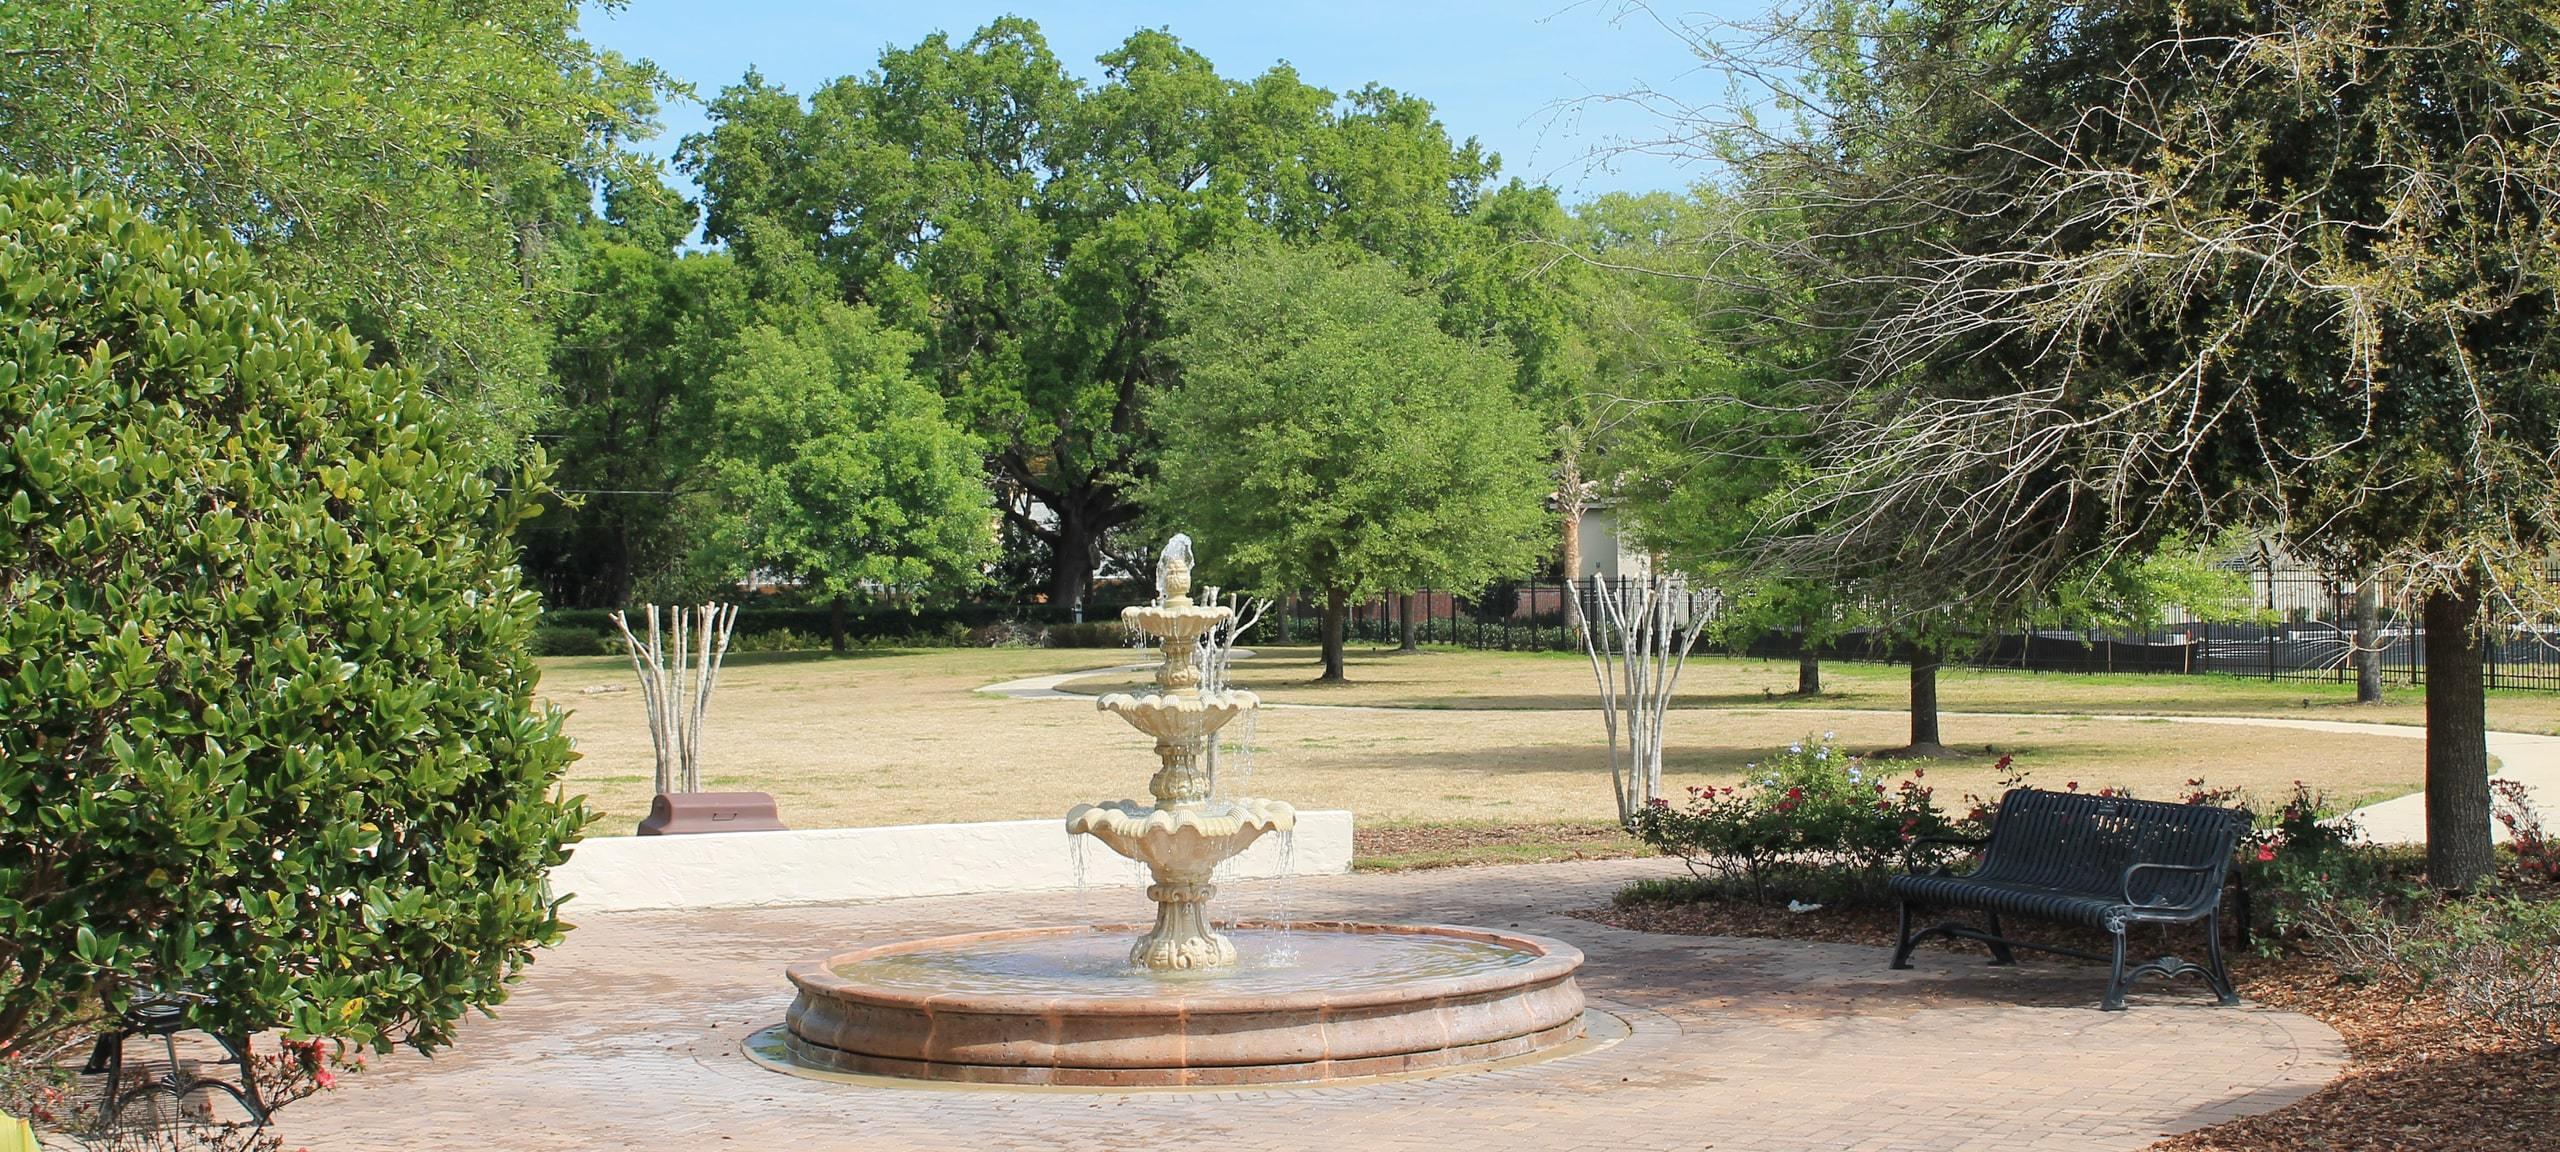 Fountain on sunny day in Baldwin Park, Orlando neighborhood park